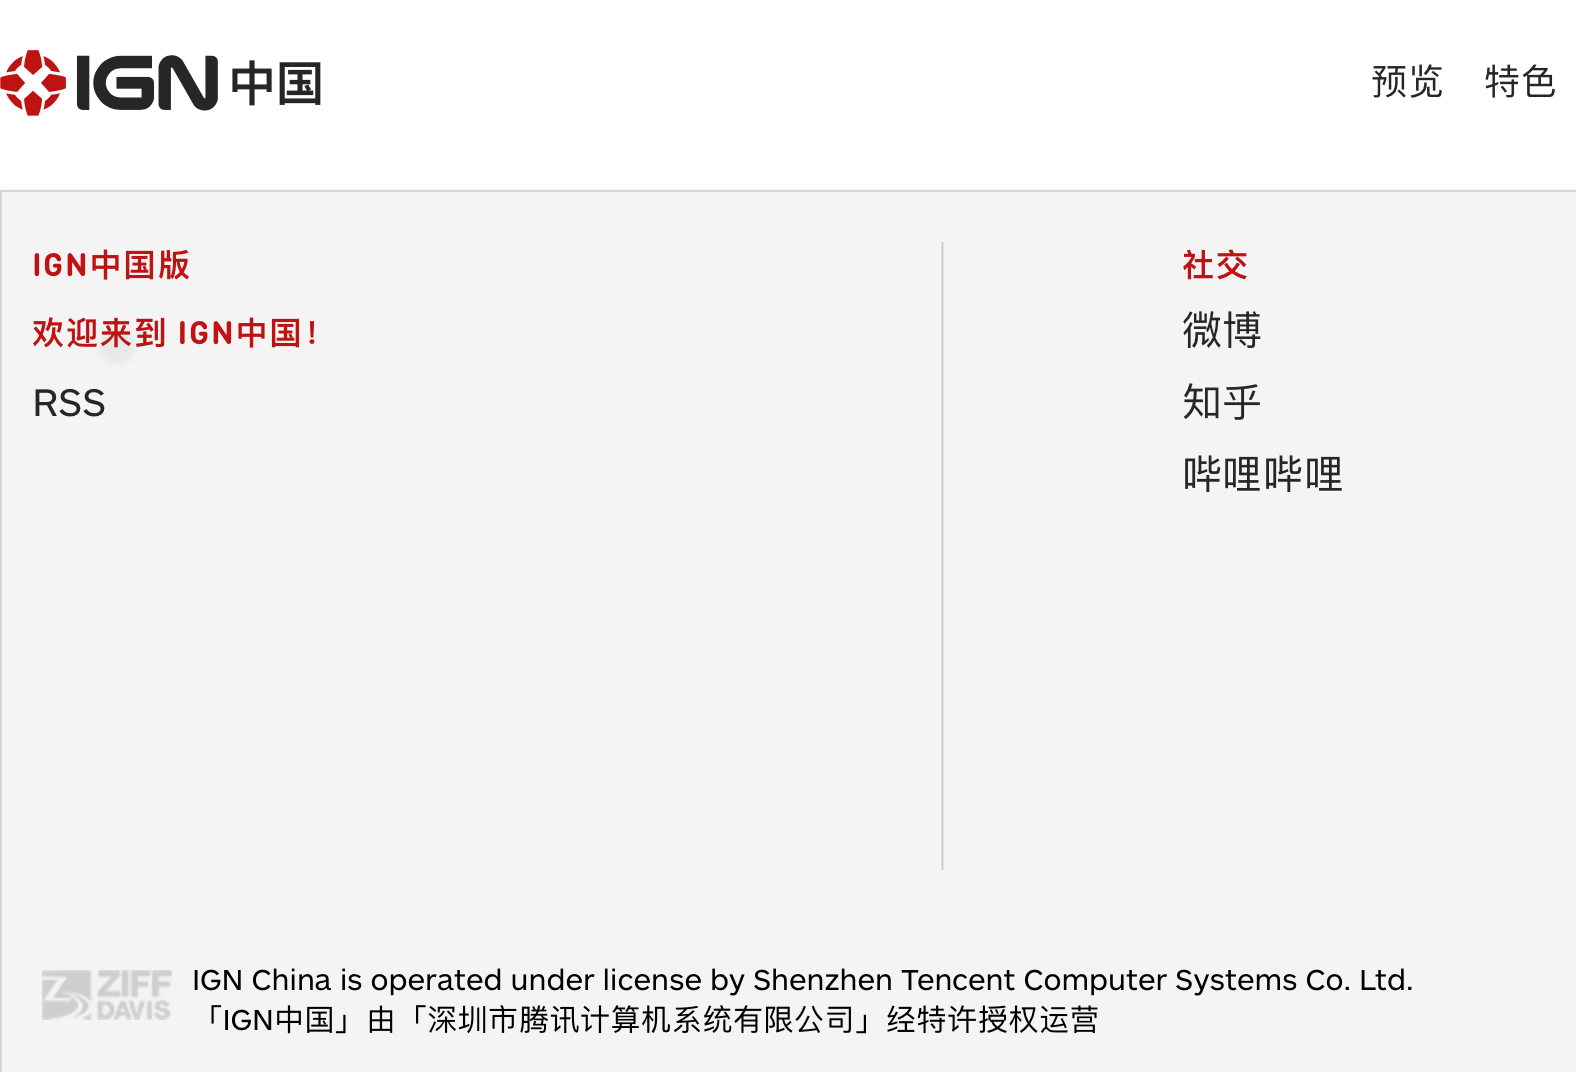 IGN中国由腾讯授权运营